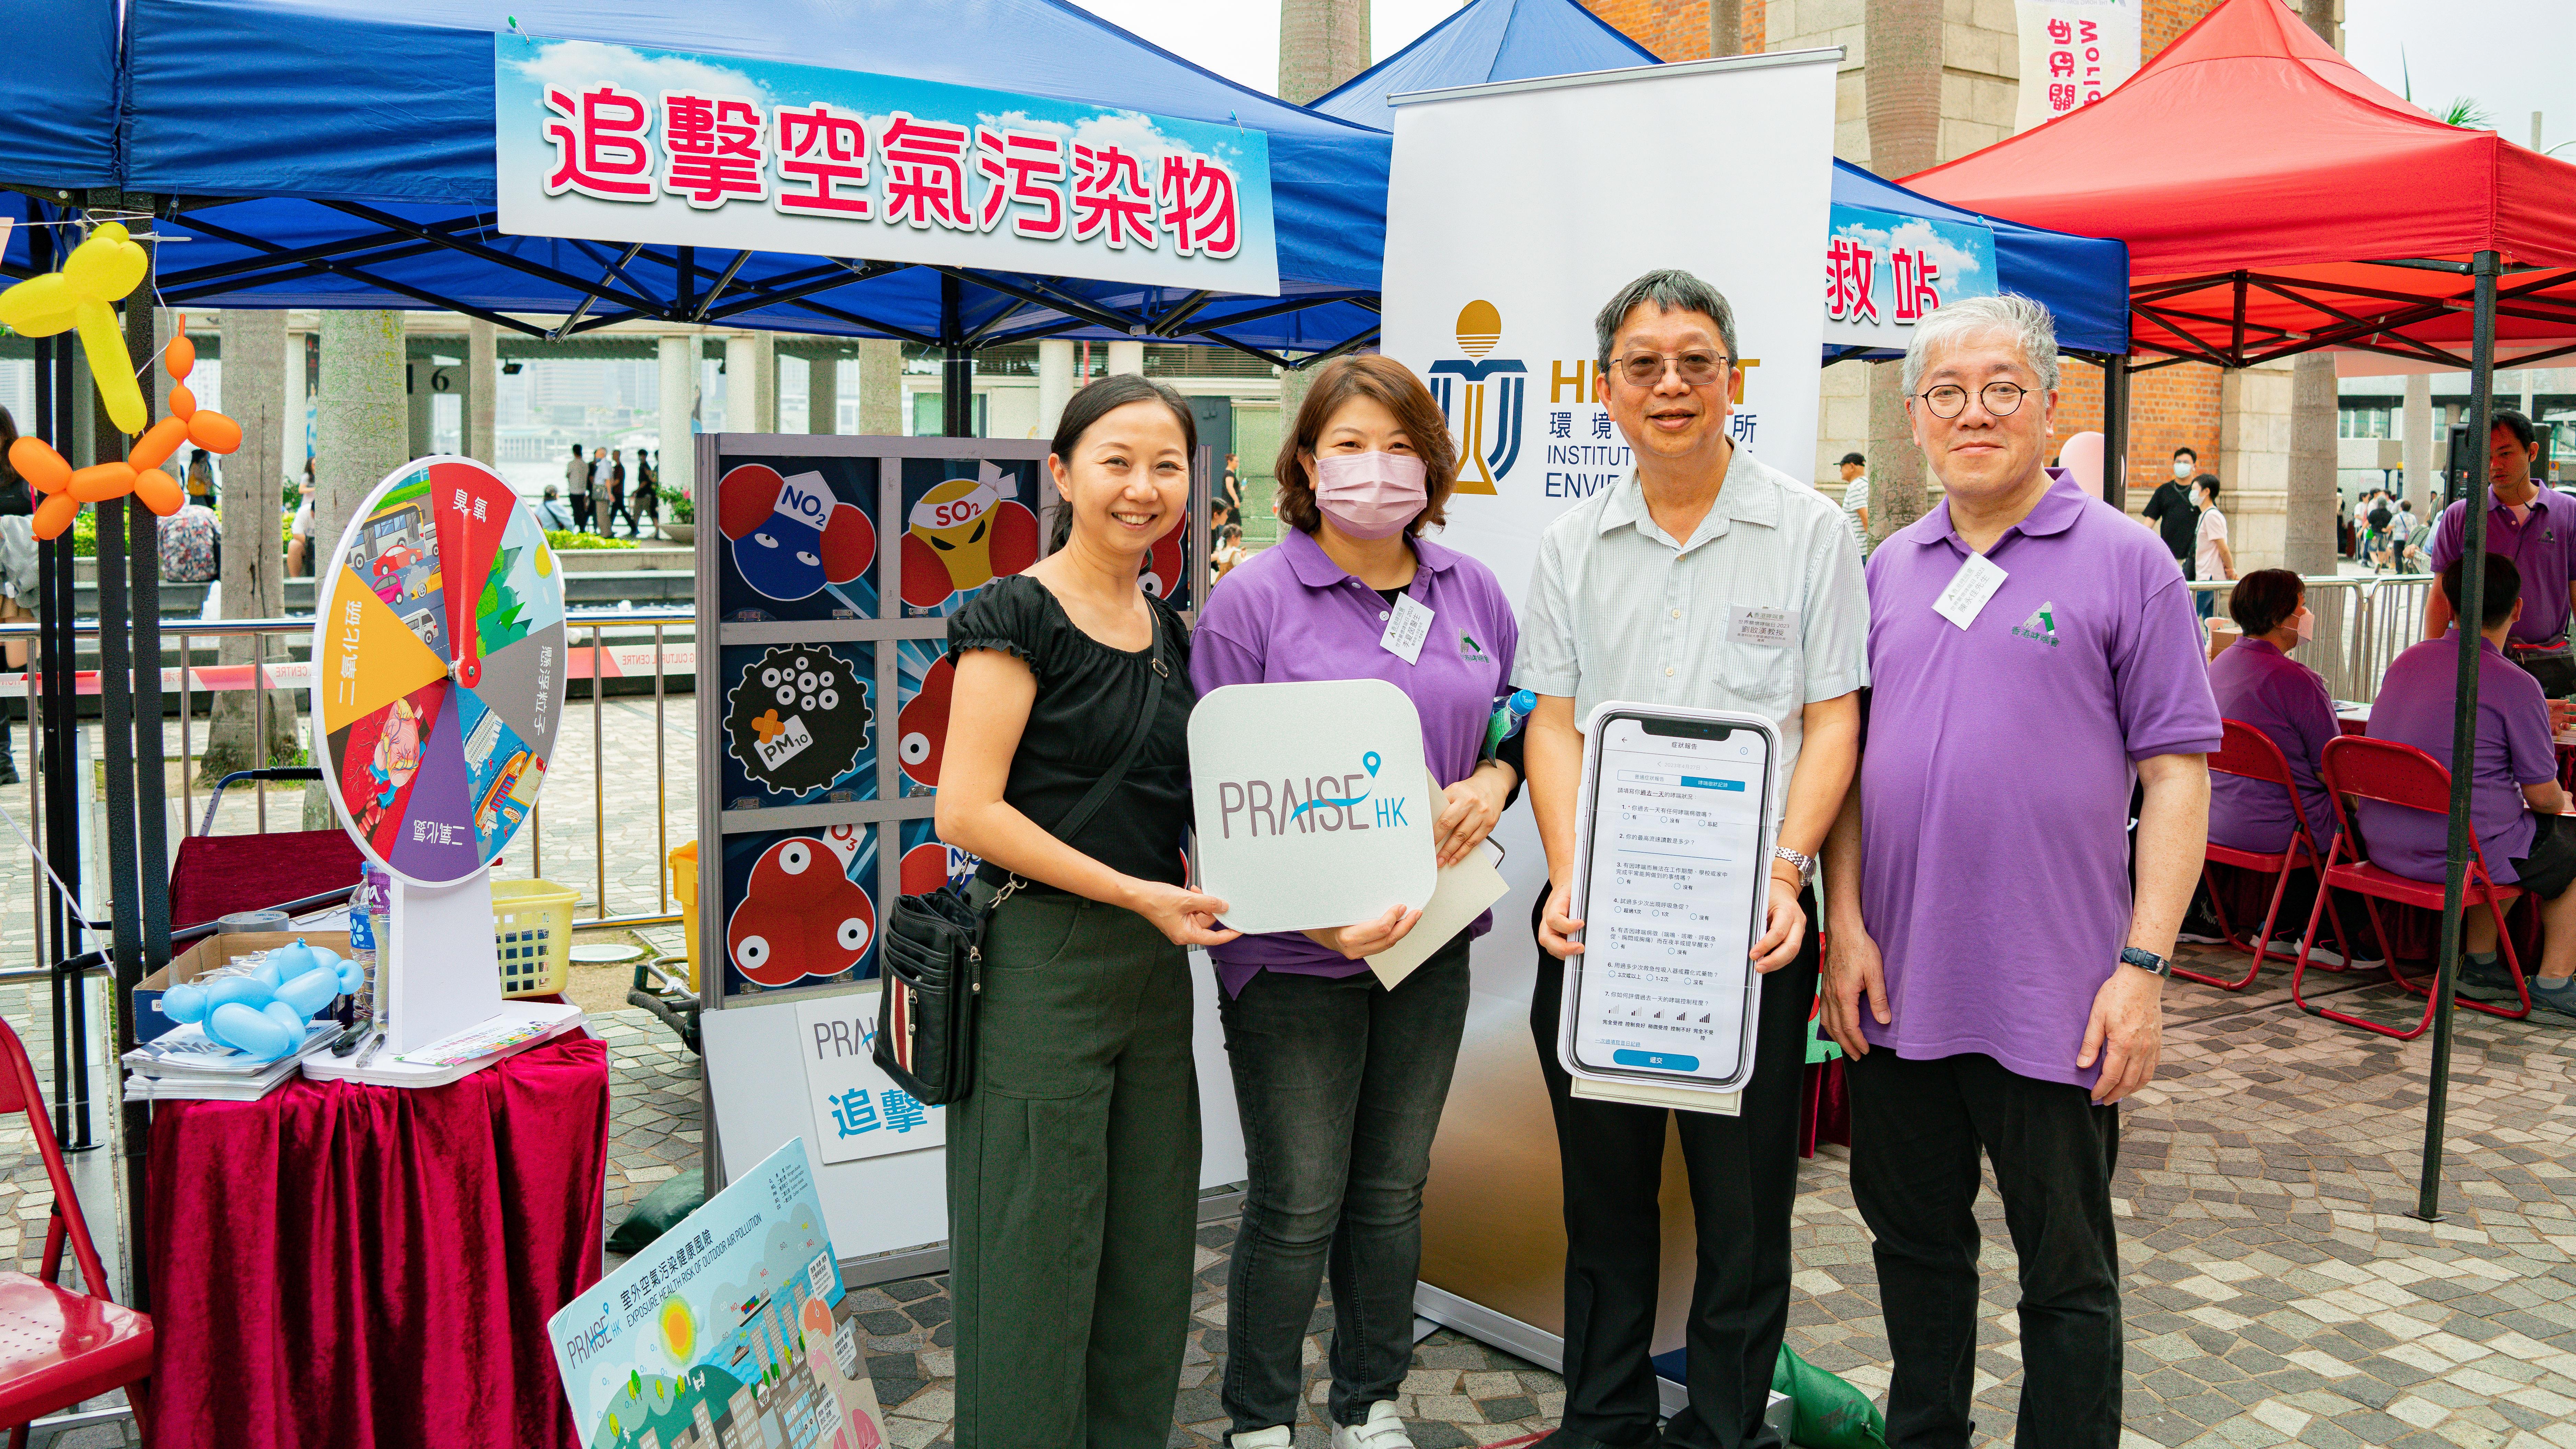 20230429 Asthma Day PRAISE-HK Hong Kong Asthma Society